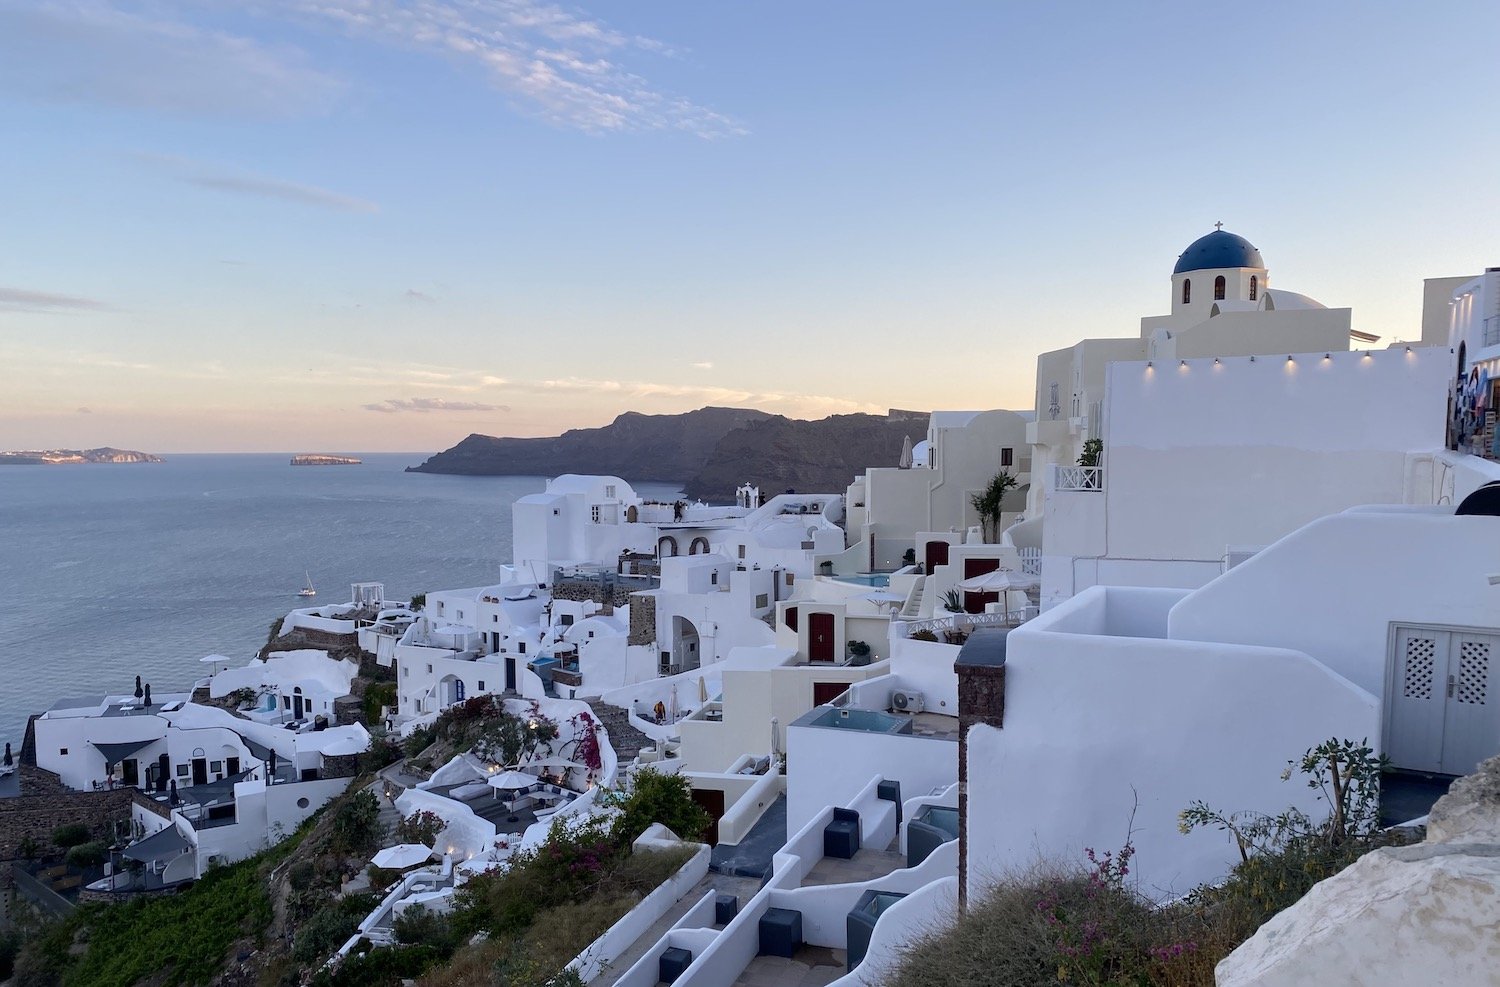 Explore Greek culture and history